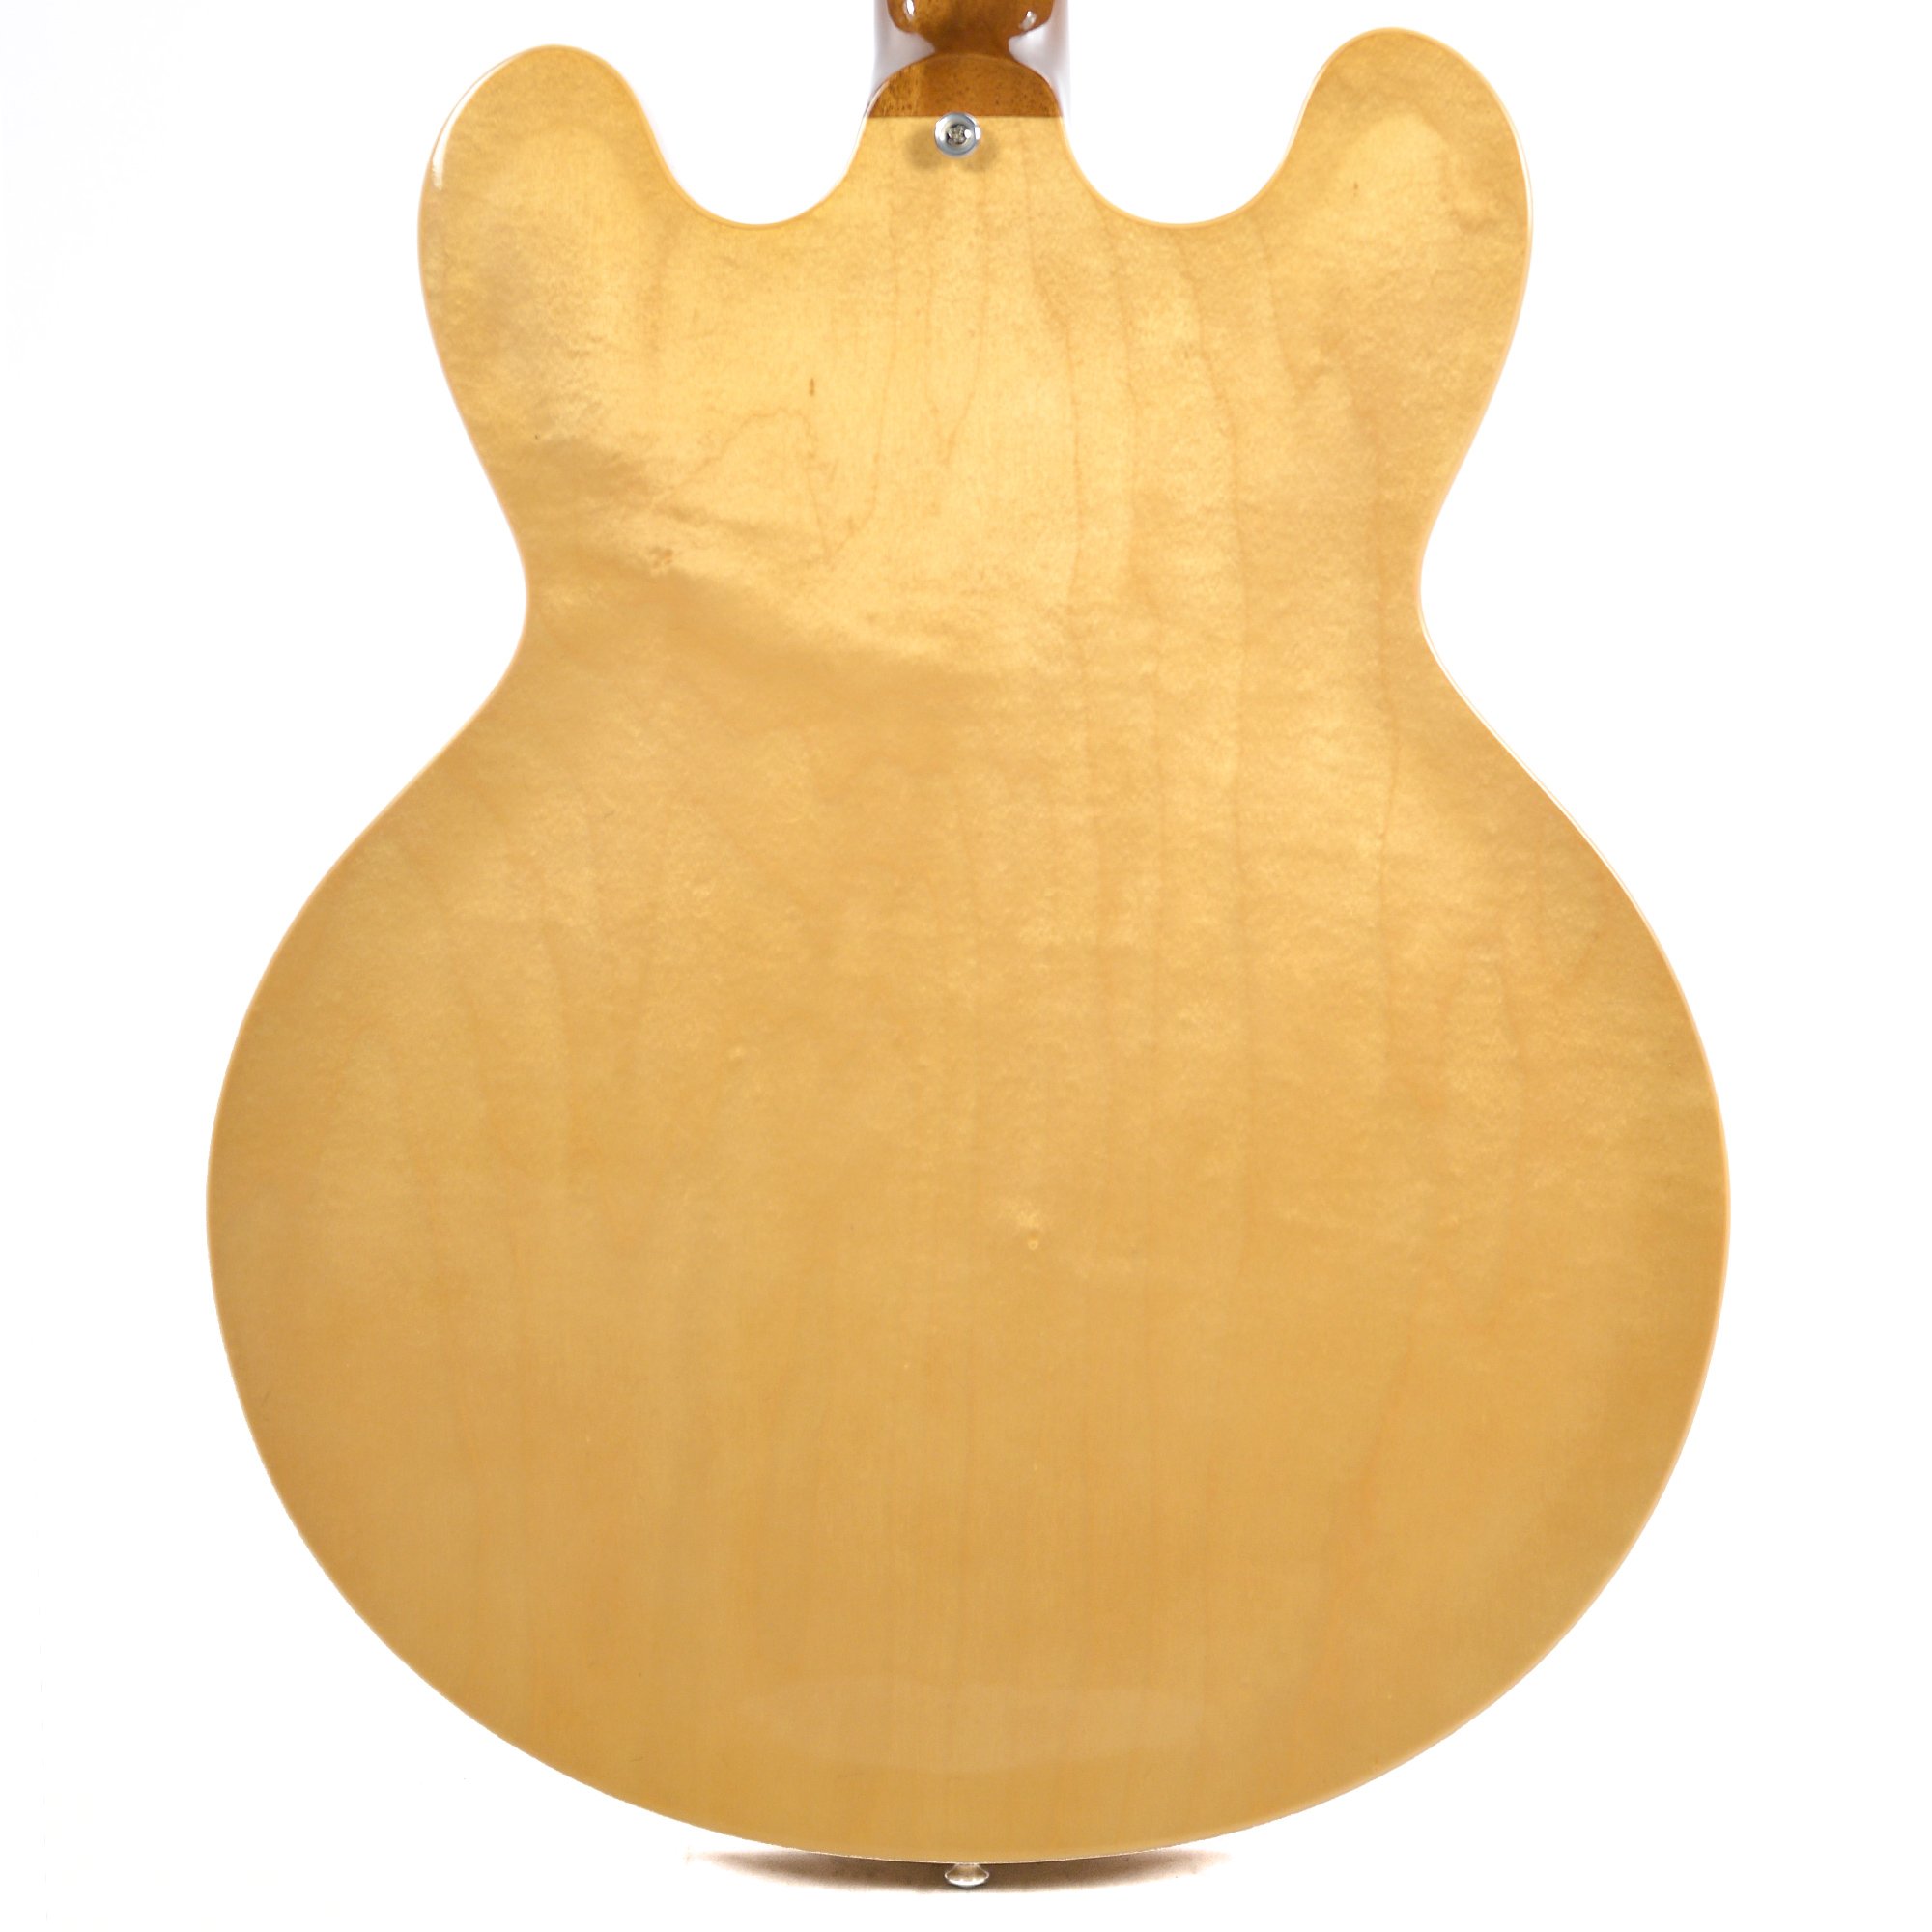 Gibson Es-335 Traditional 2018 Ltd - Dark Vintage Natural - Semi hollow elektriche gitaar - Variation 3